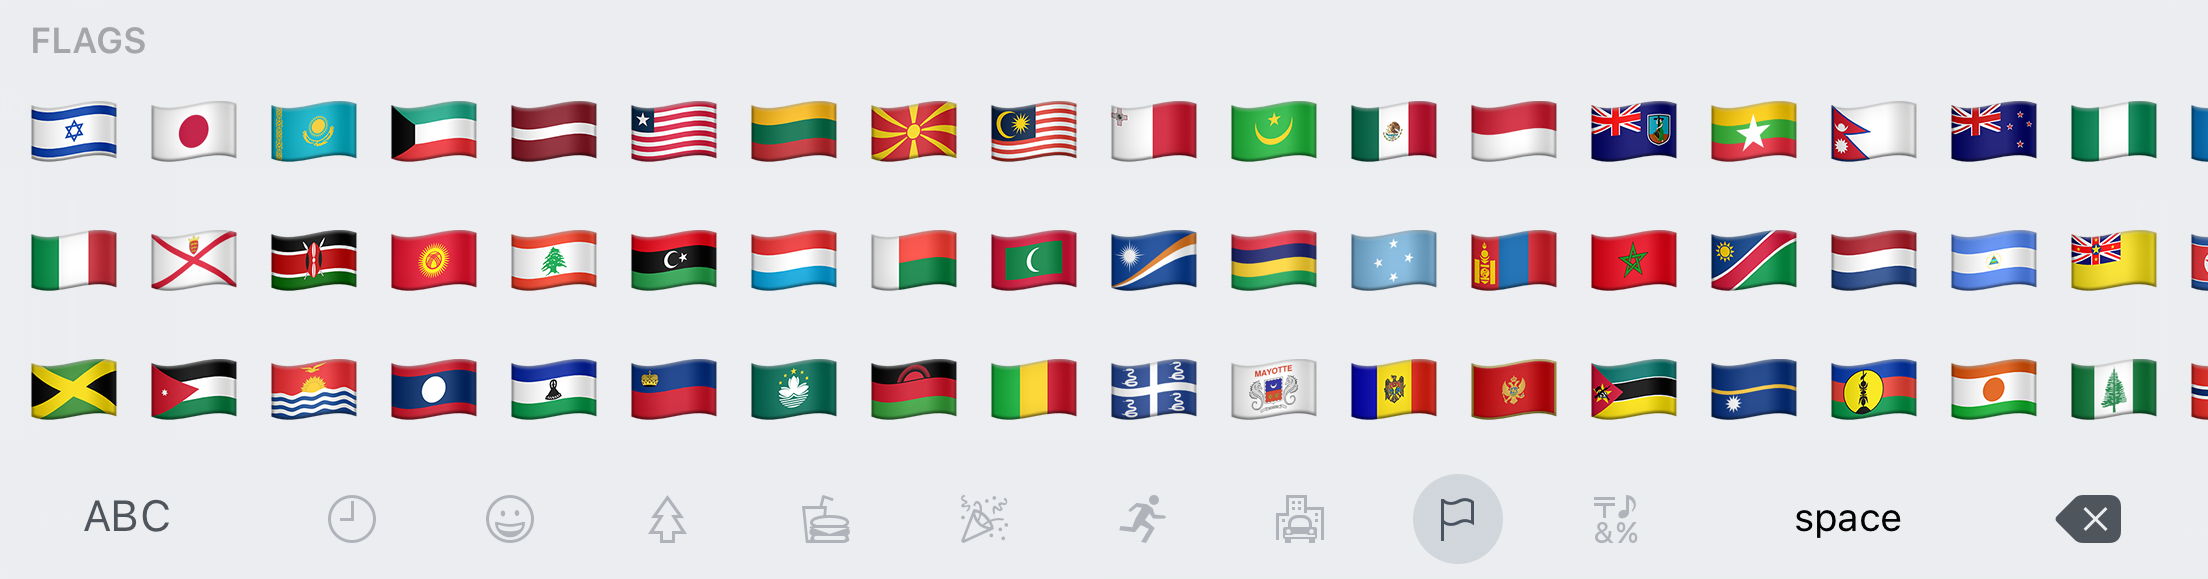 how to put flag emoji on twitter